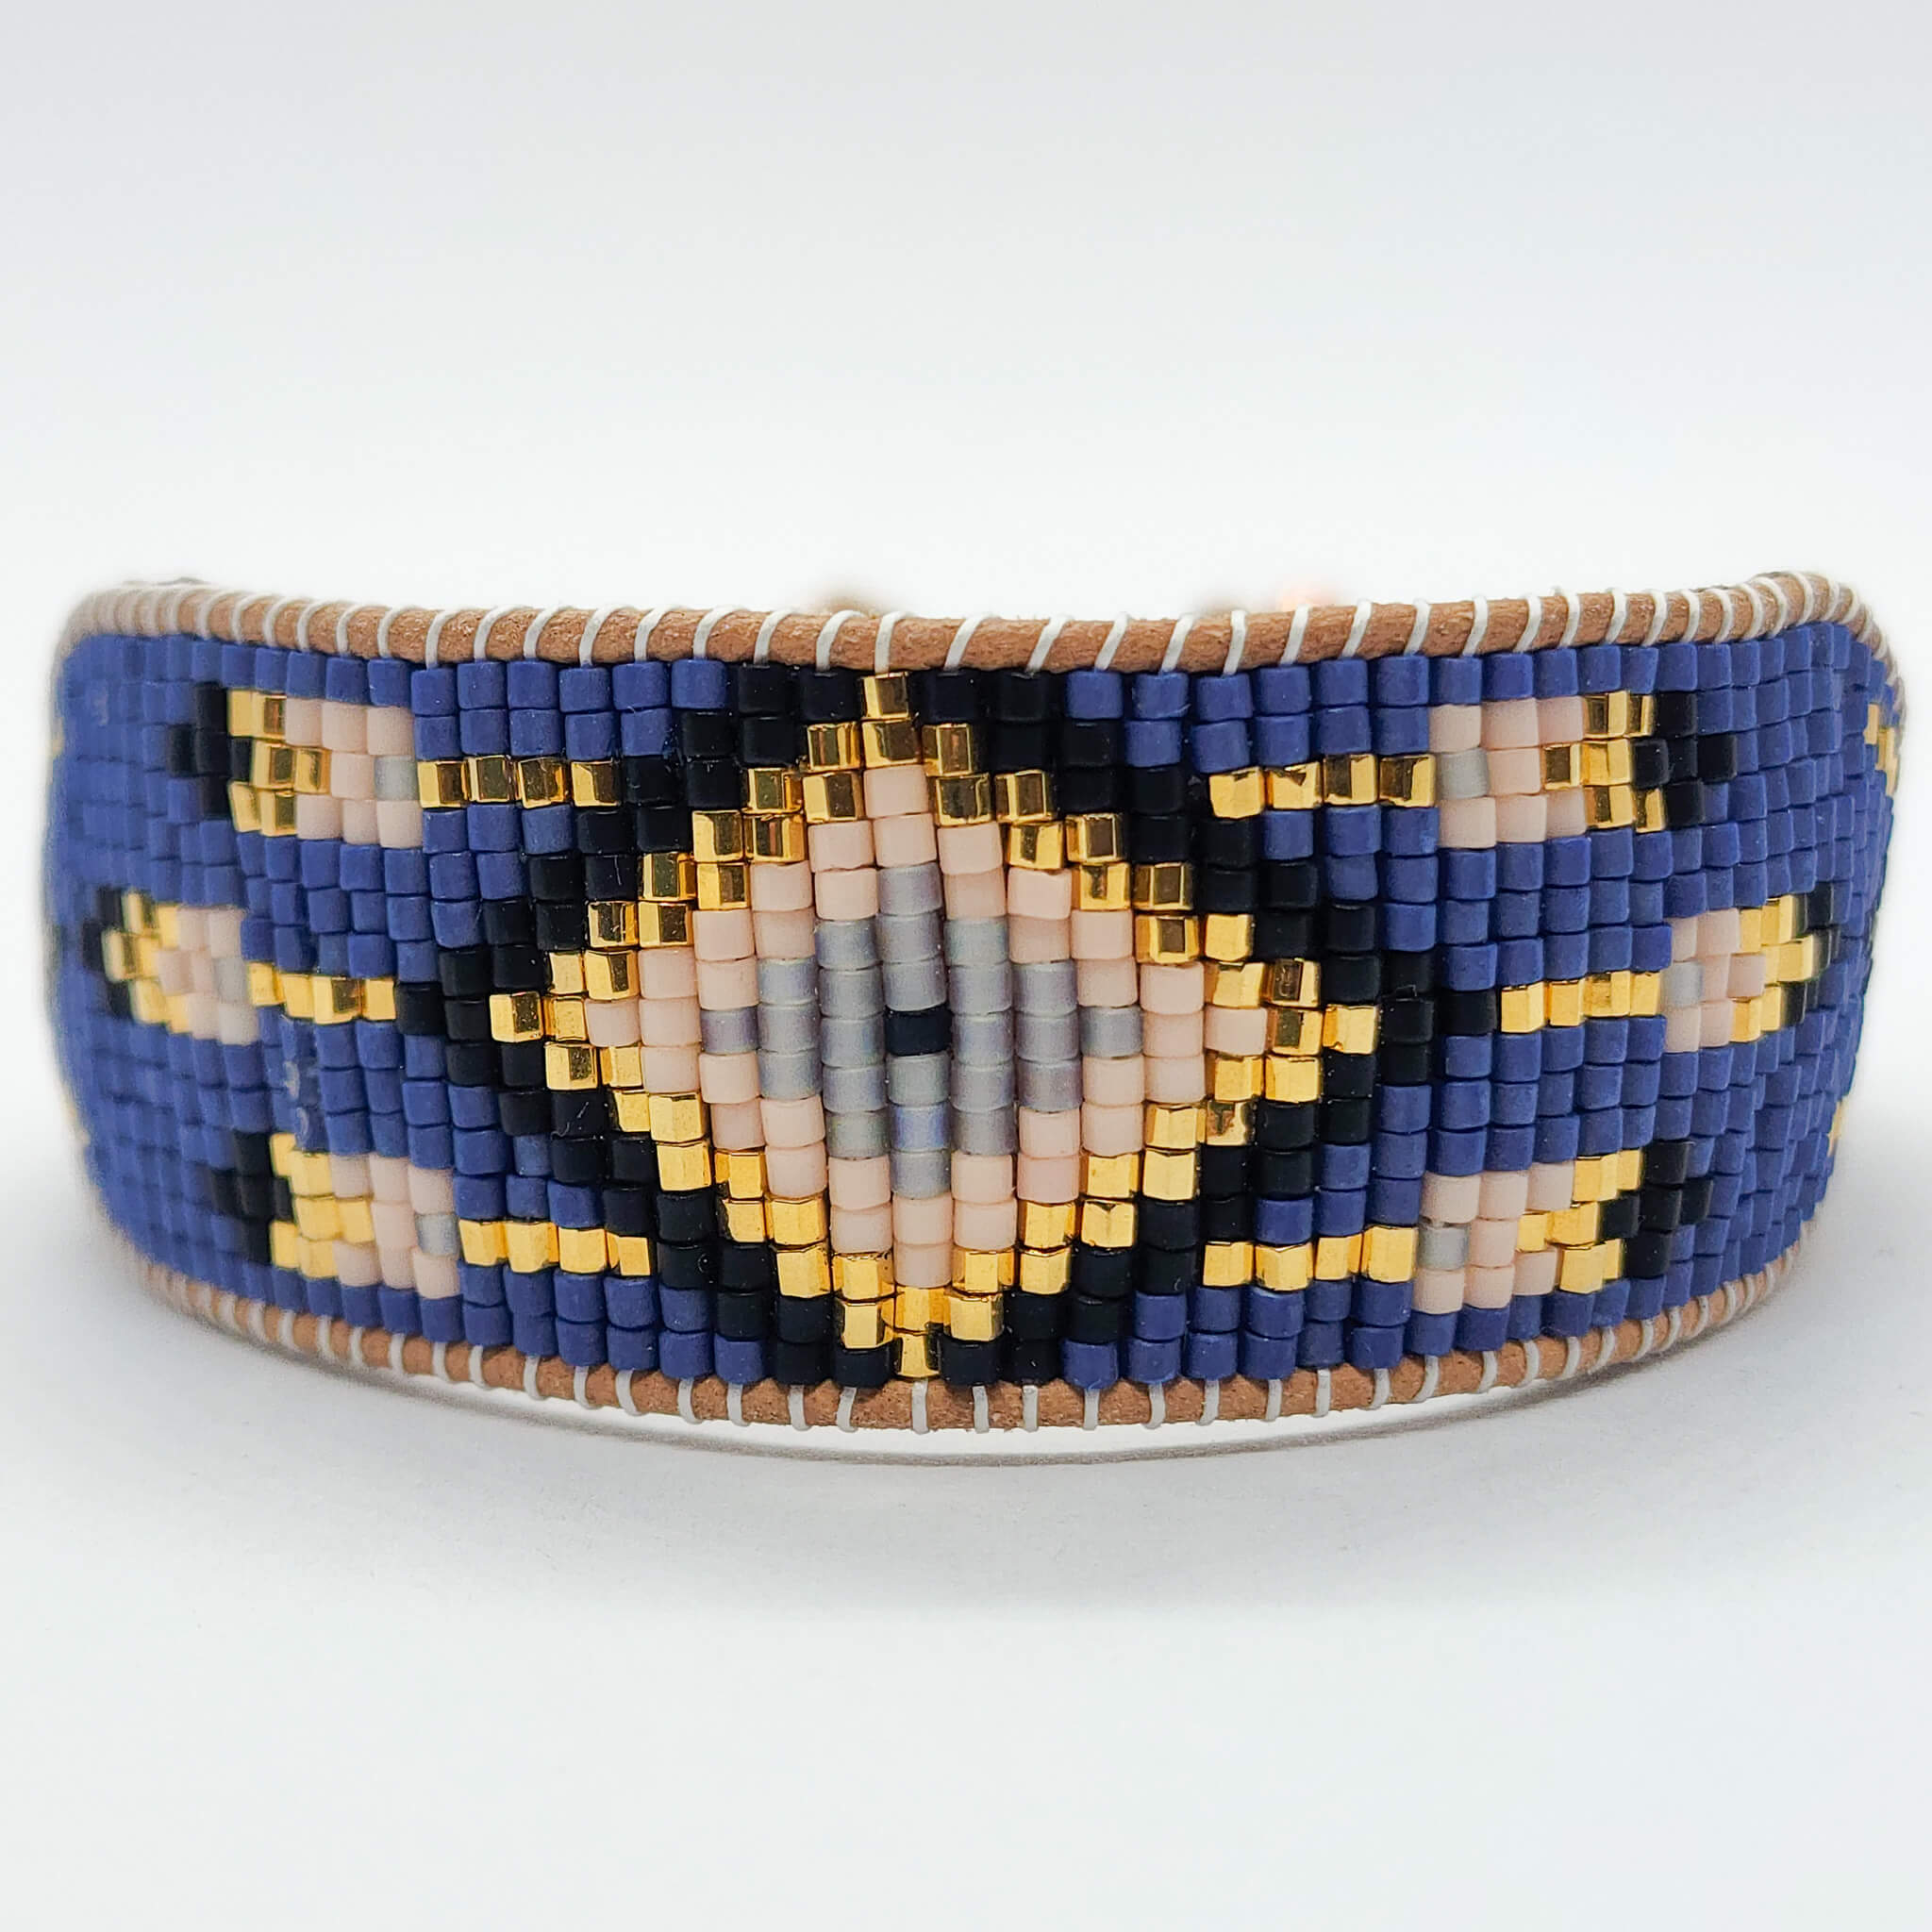 Dream Catcher Bracelet with lapis lazuli stones for brow chakra healing